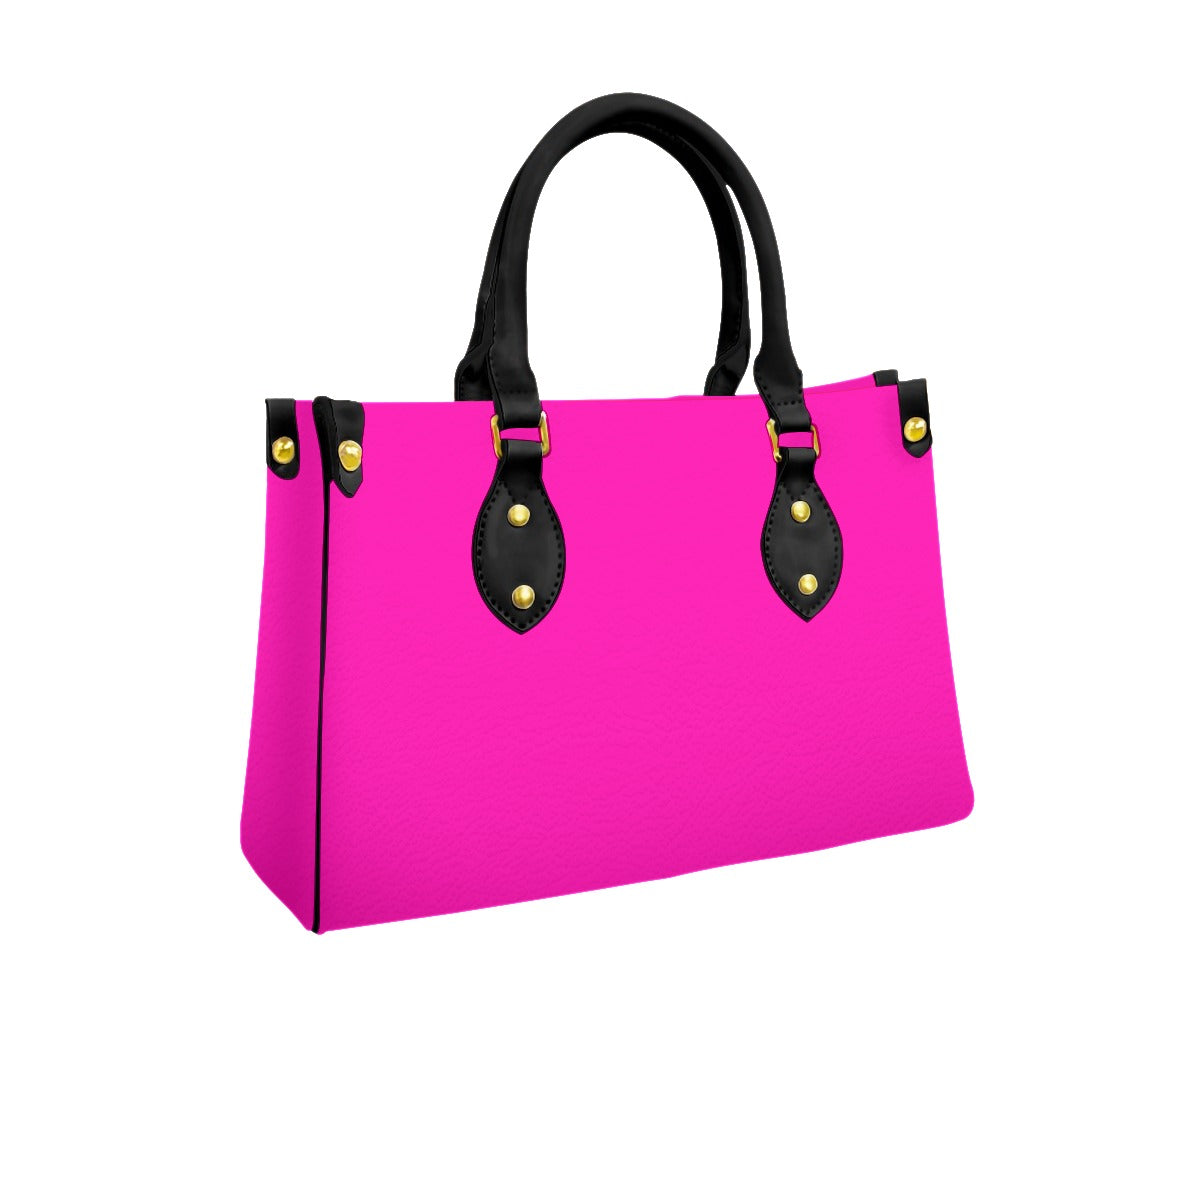 TGC FASHION Hot Pink Handbag